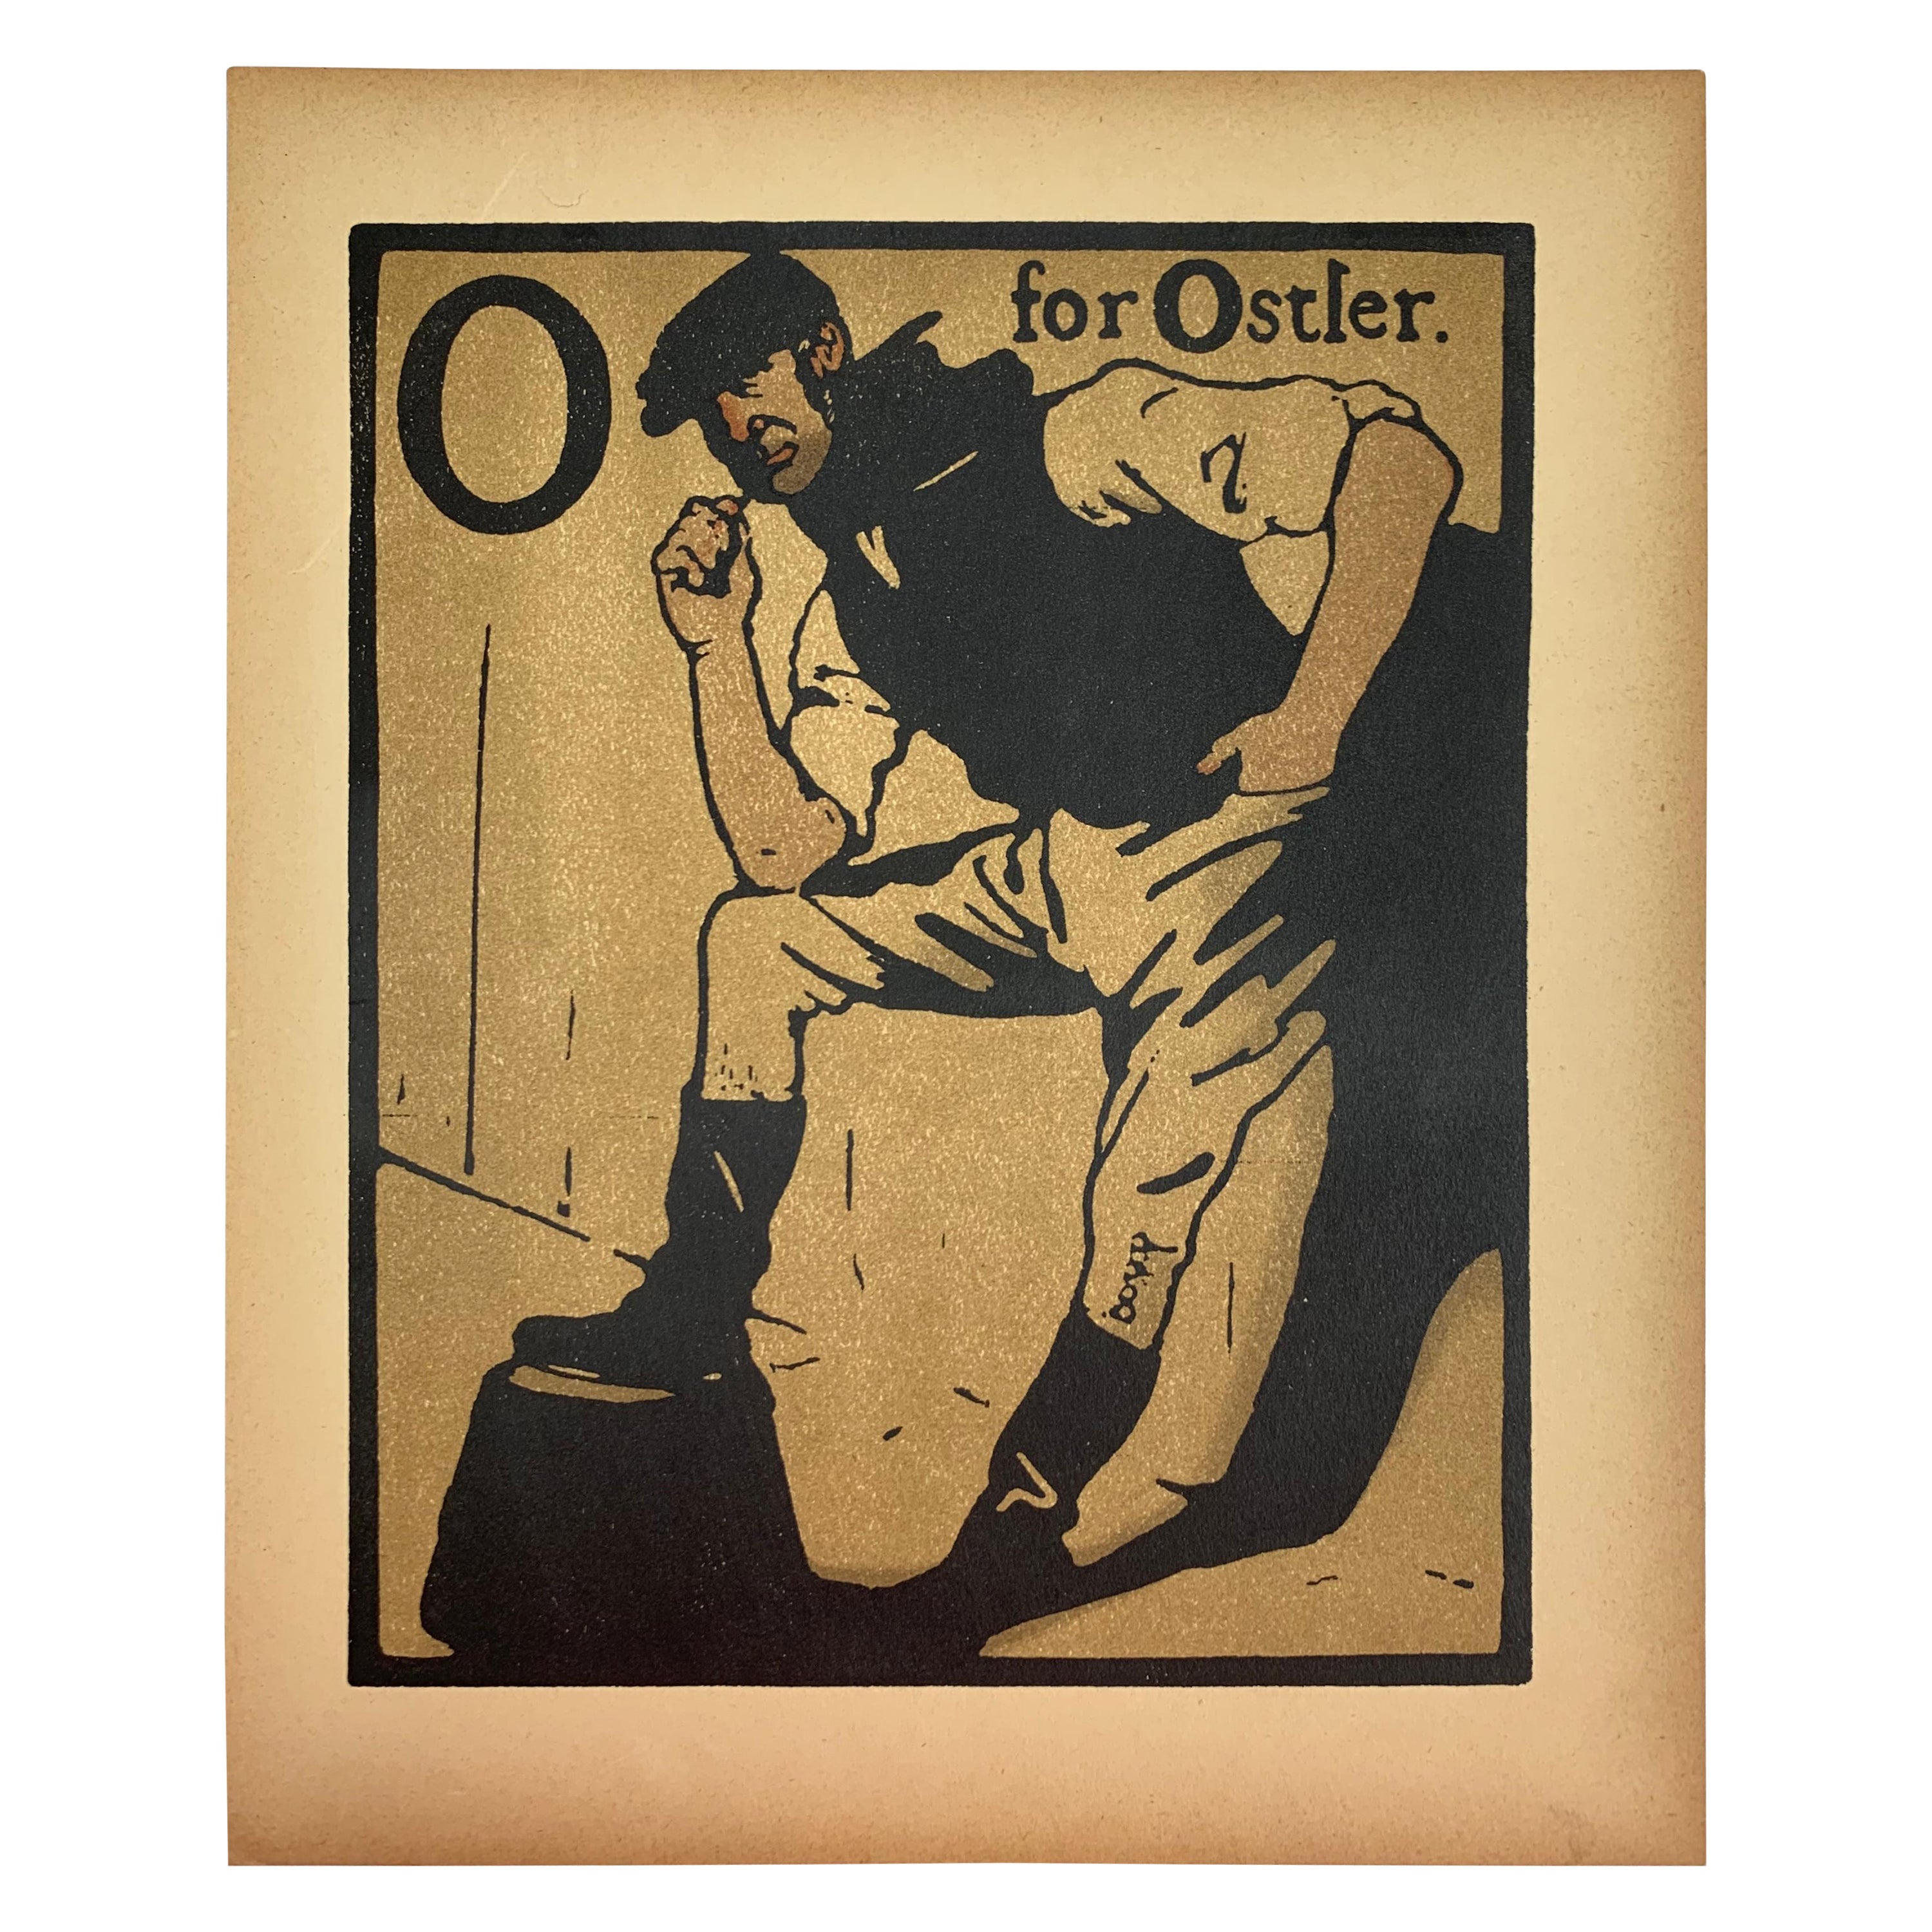 "An Alphabet", O for Ostler by William Nicholson, First Edition, London, 1898